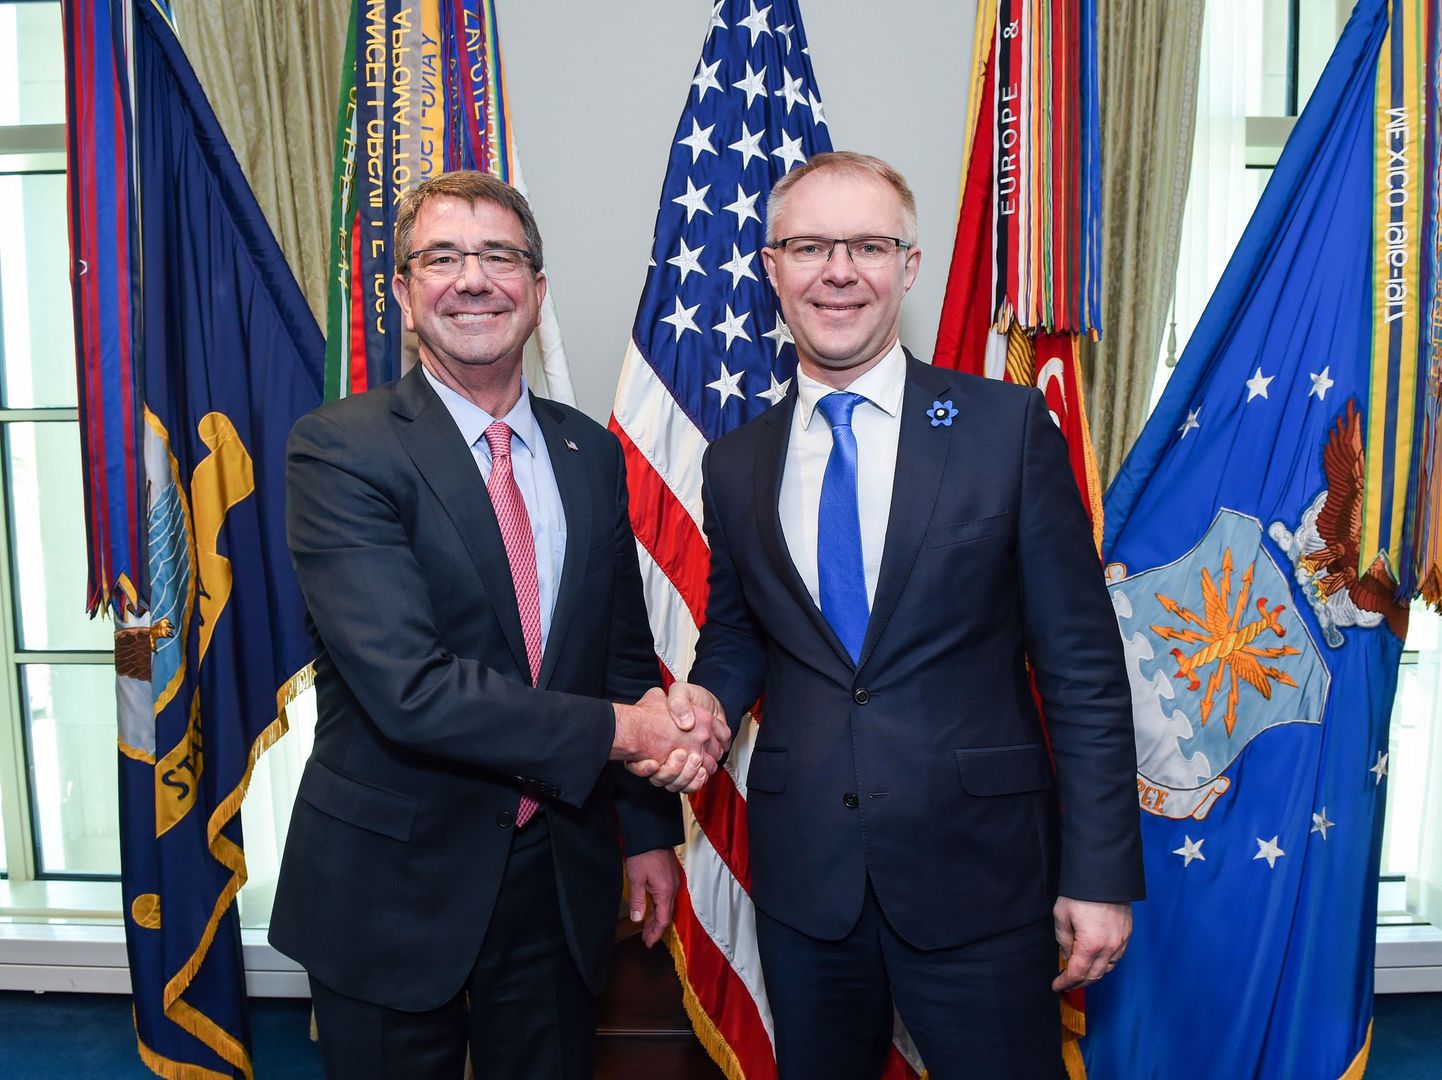 Ameerika Ühendriikide kaitseminister Ashton Carter ja Eesti kaitseminister Hannes Hanso